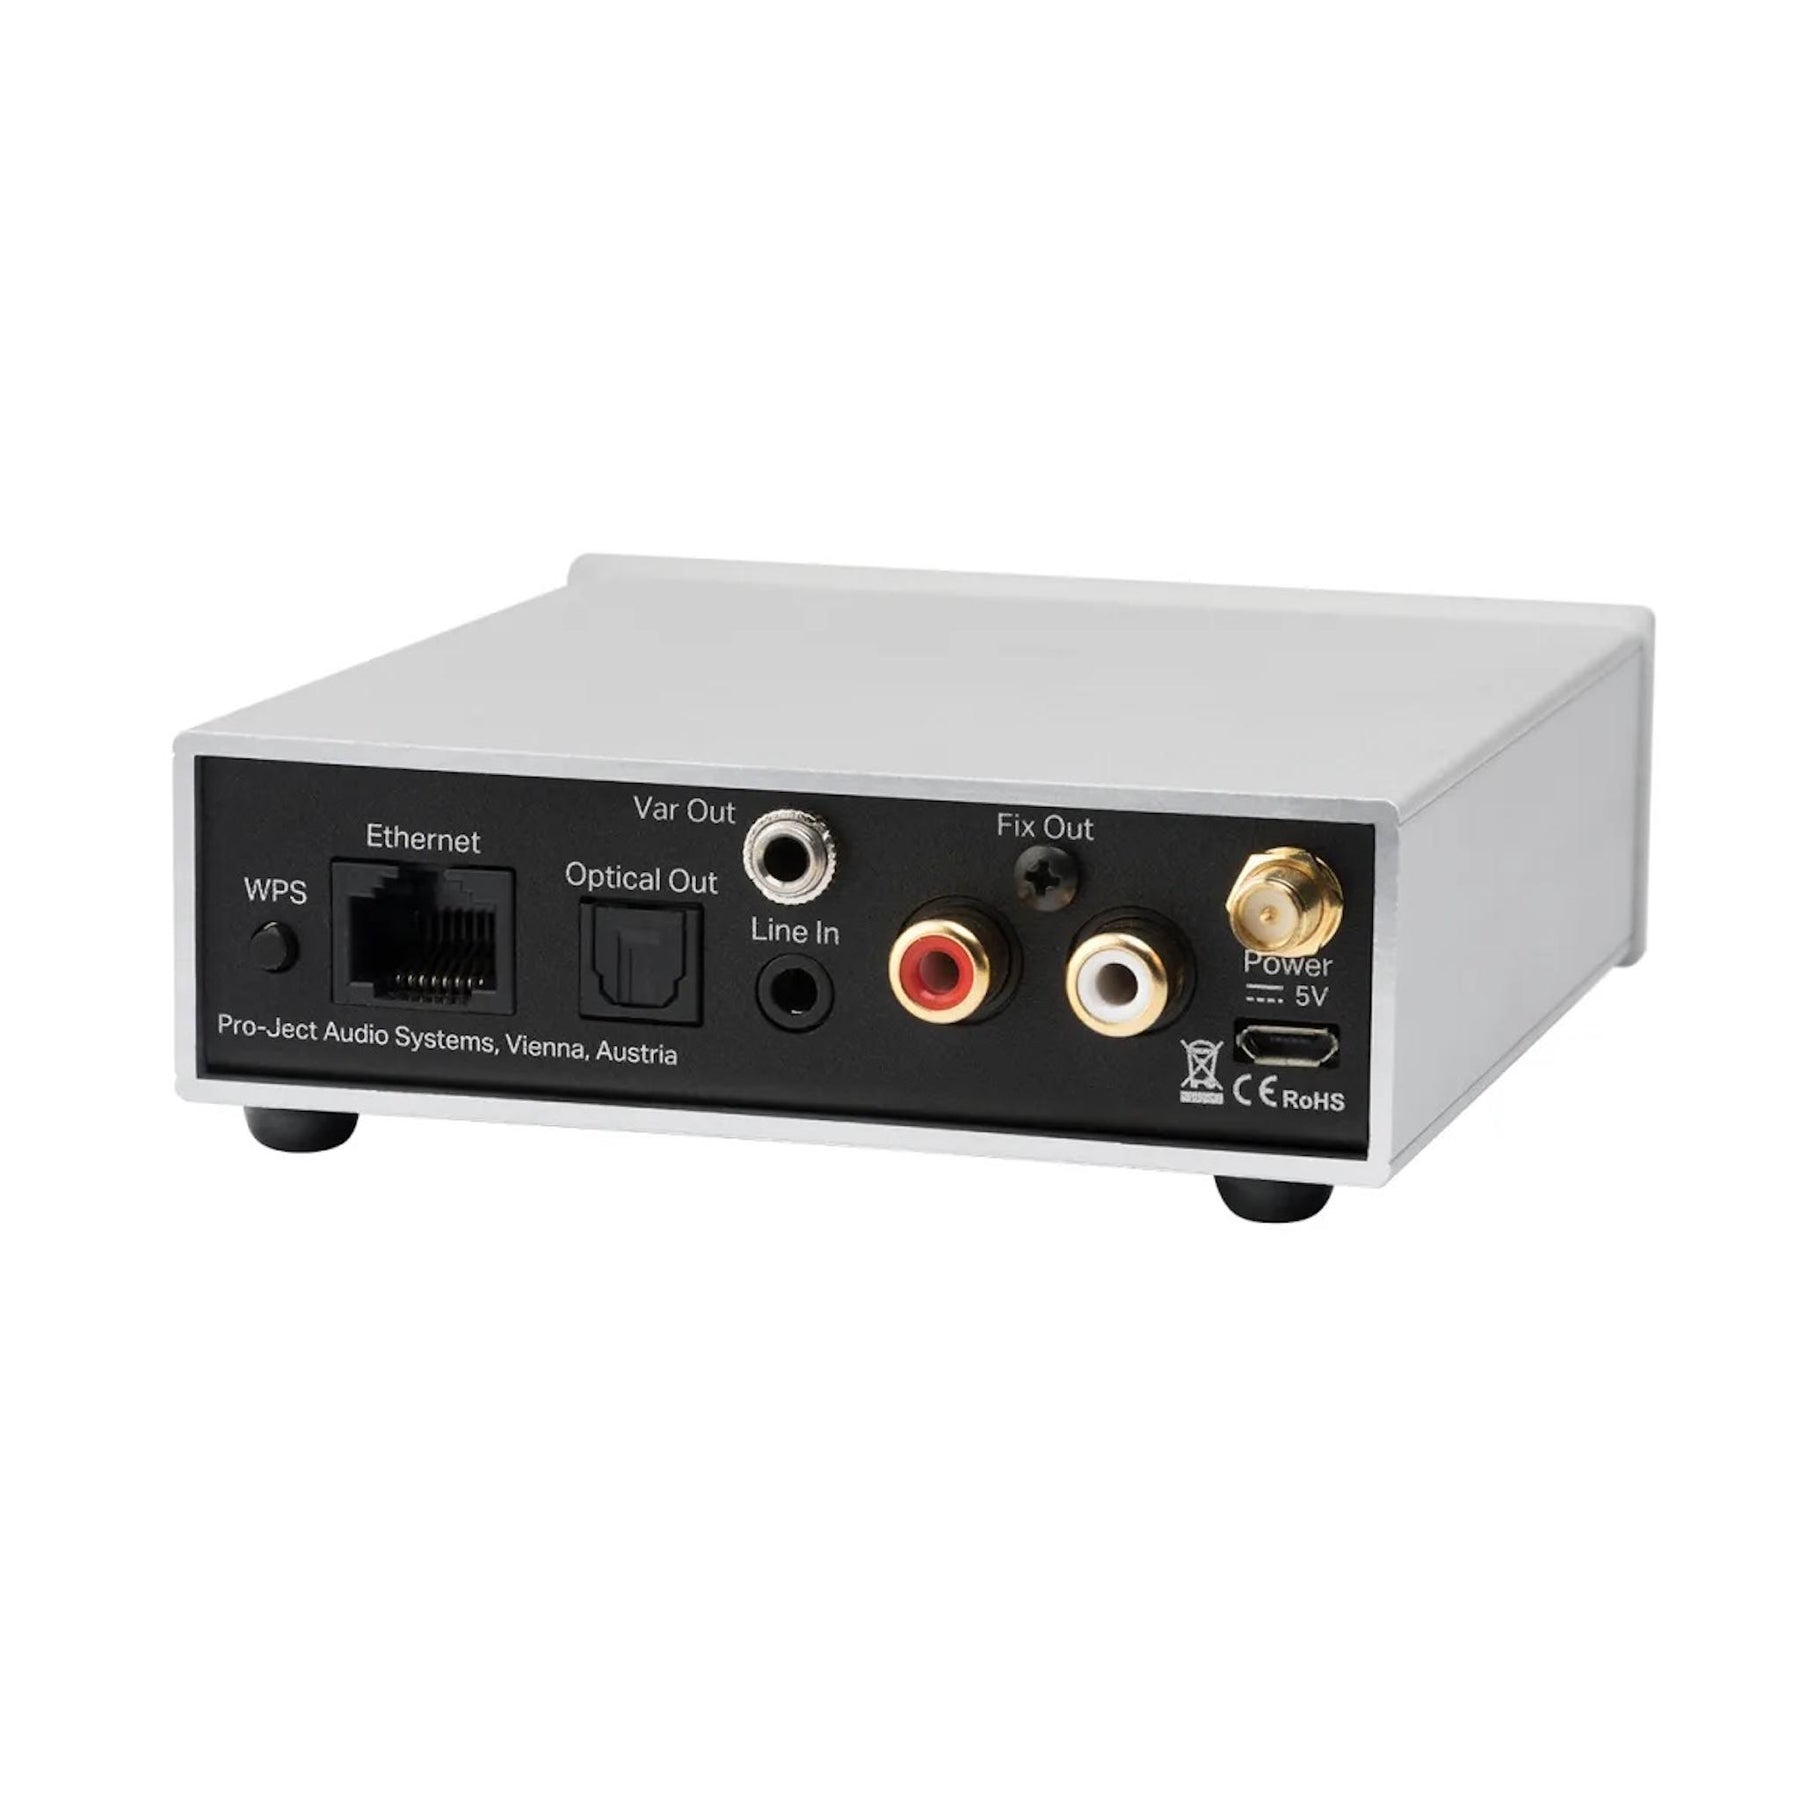 Pro-Ject Stream Box S2 - Network Streamer - AVStore